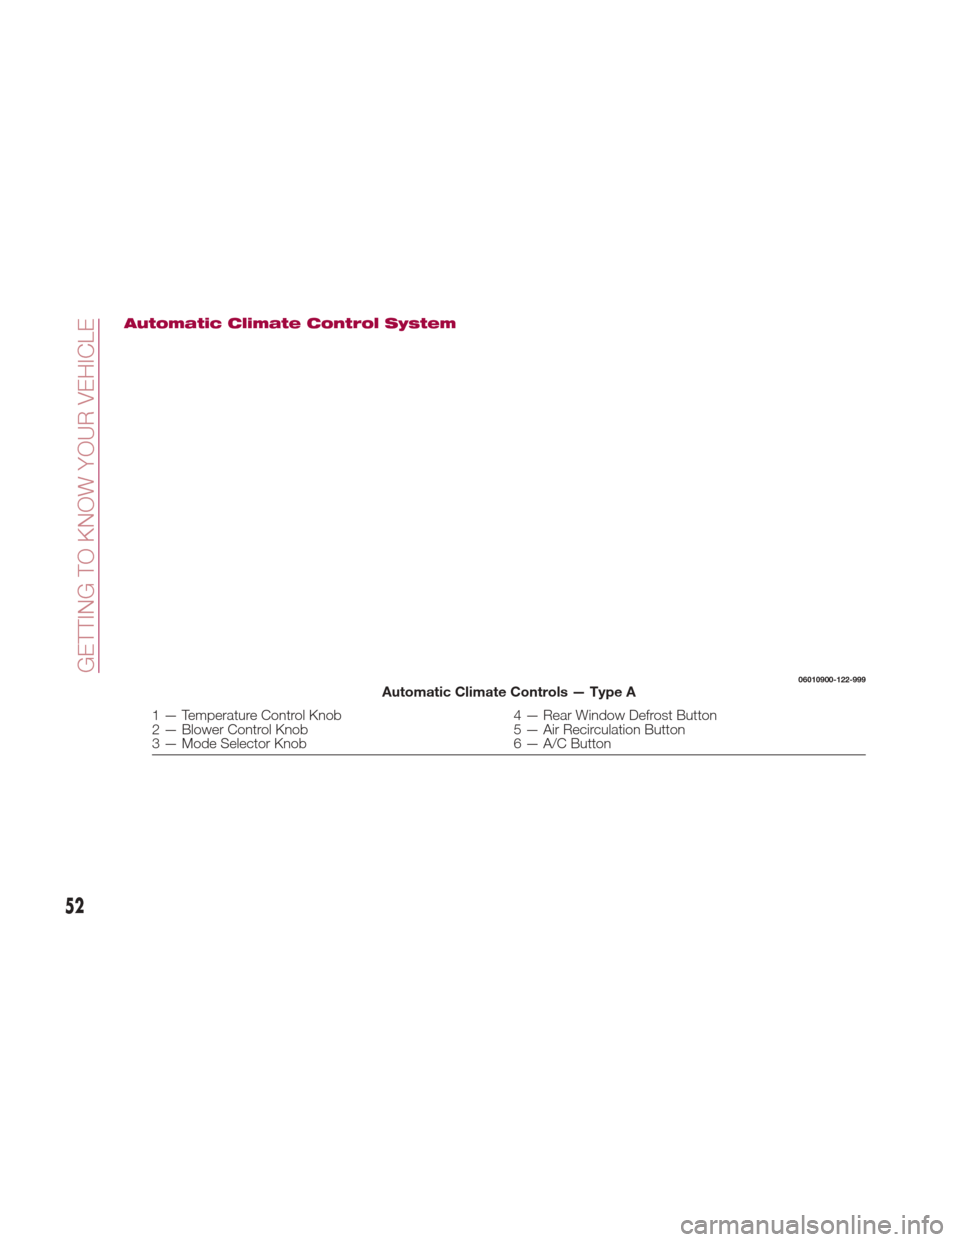 FIAT 124 SPIDER ABARTH 2017 2.G Workshop Manual Automatic Climate Control System
06010900-122-999Automatic Climate Controls — Type A
1 — Temperature Control Knob4 — Rear Window Defrost Button
2 — Blower Control Knob 5 — Air Recirculation 